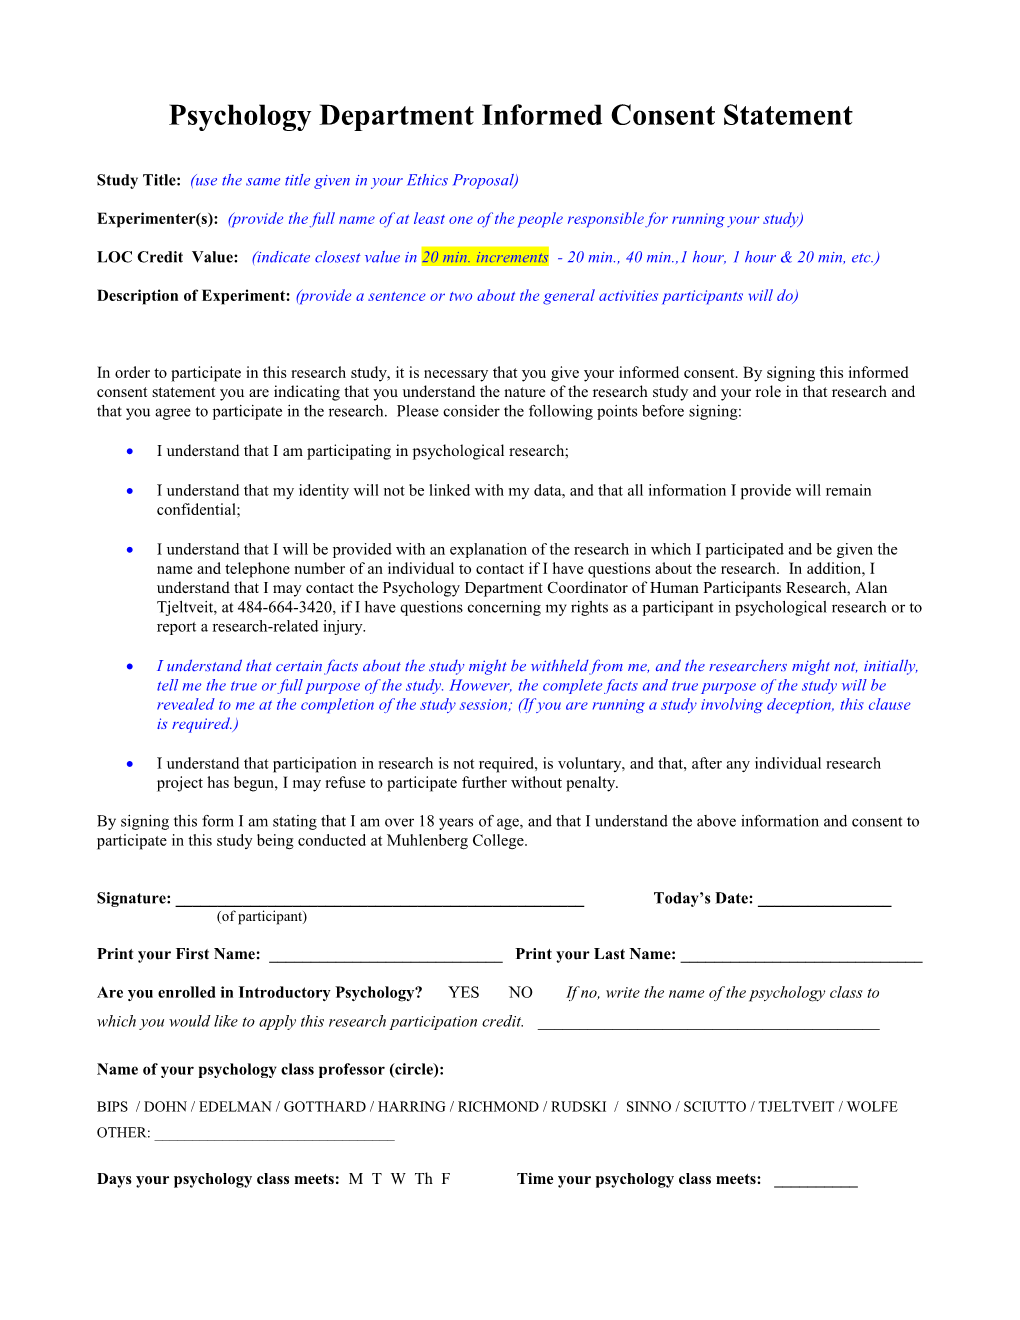 Psychology Department Informed Consent Form